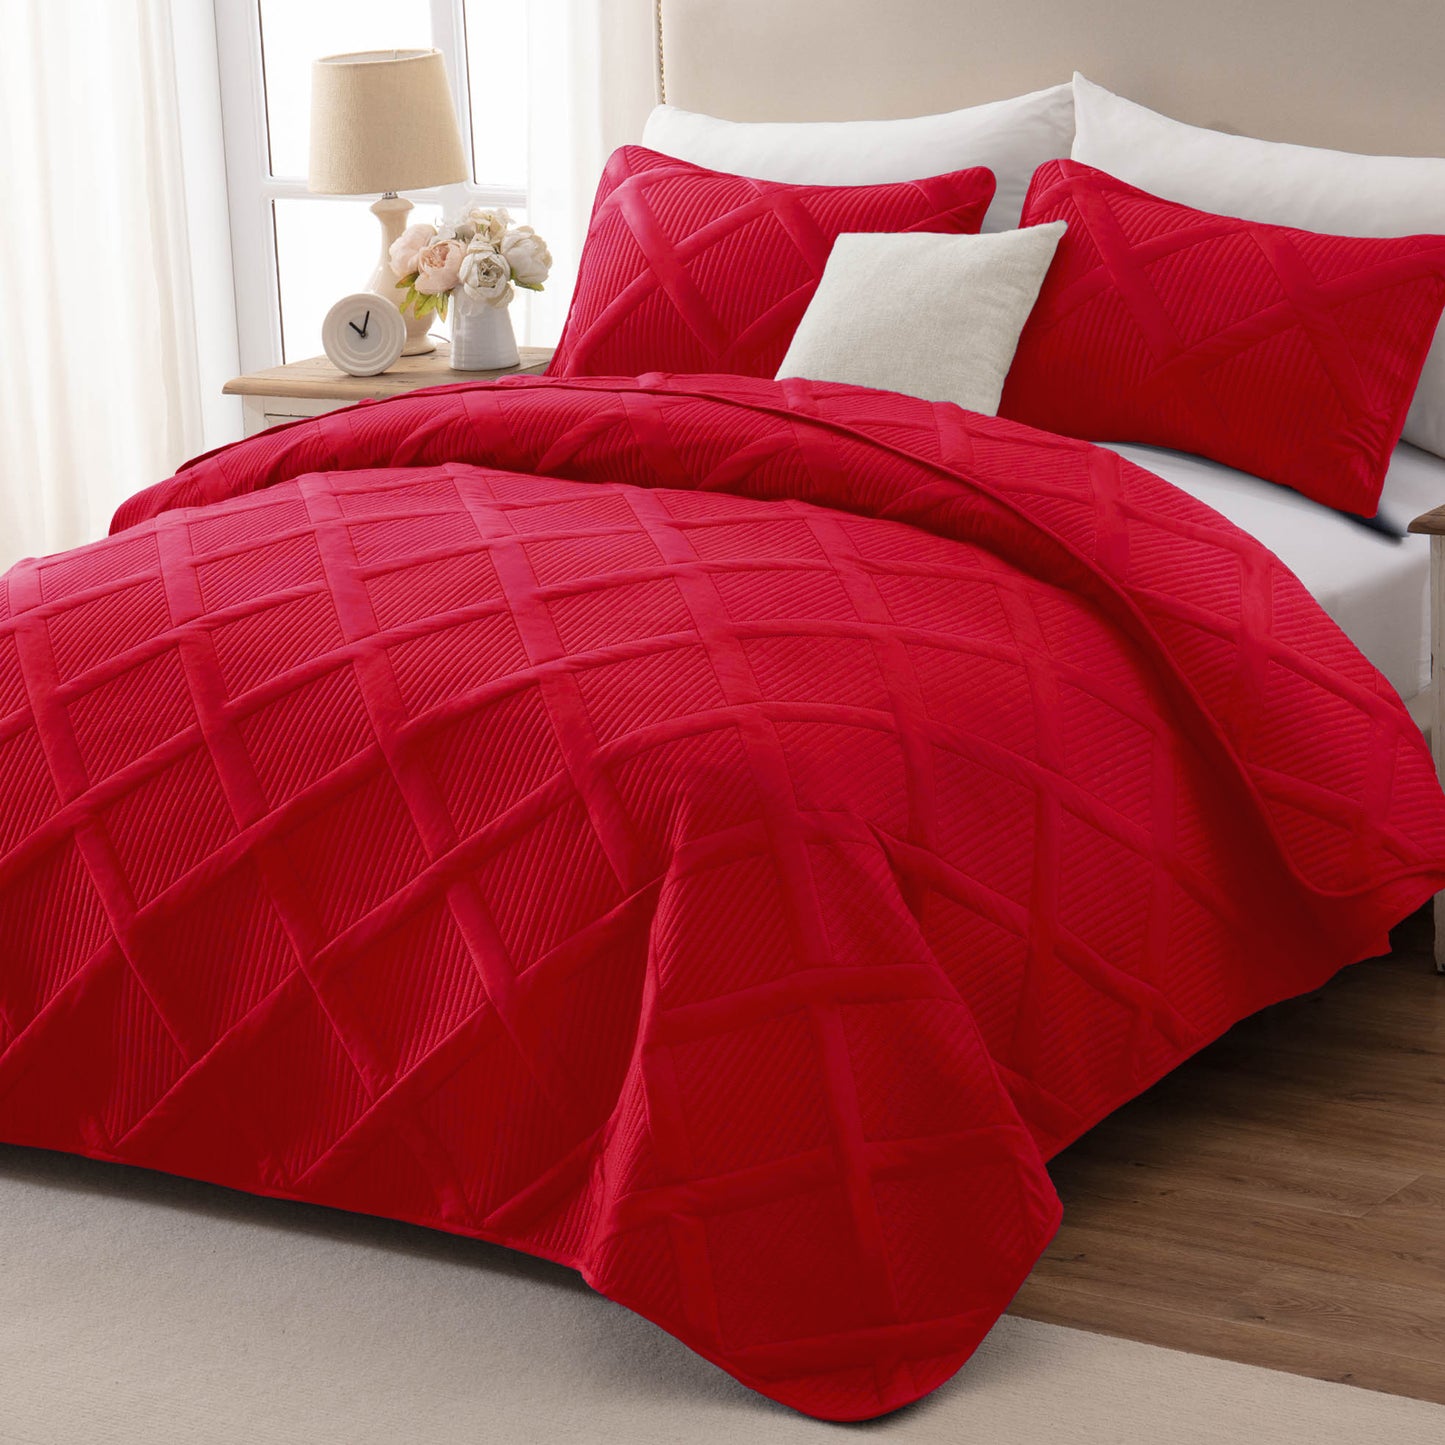 Exclusivo Mezcla Ultrasonic Full Queen Quilt Set, Lightweight Bedspreads Modern Striped Coverlet with 2 Pillow Shams, Red